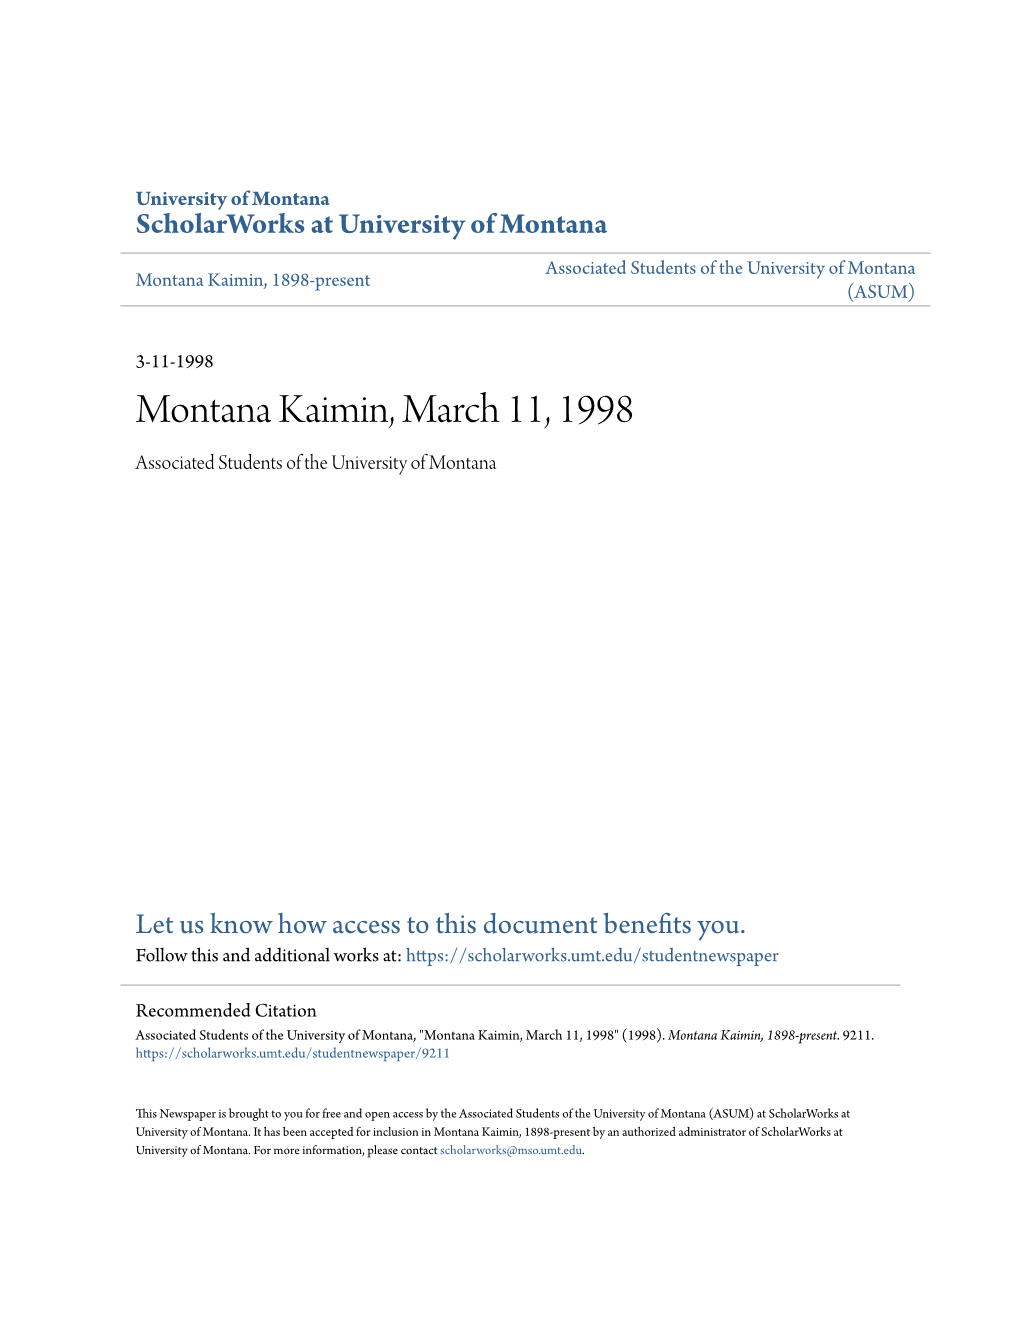 Montana Kaimin, March 11, 1998 Associated Students of the University of Montana